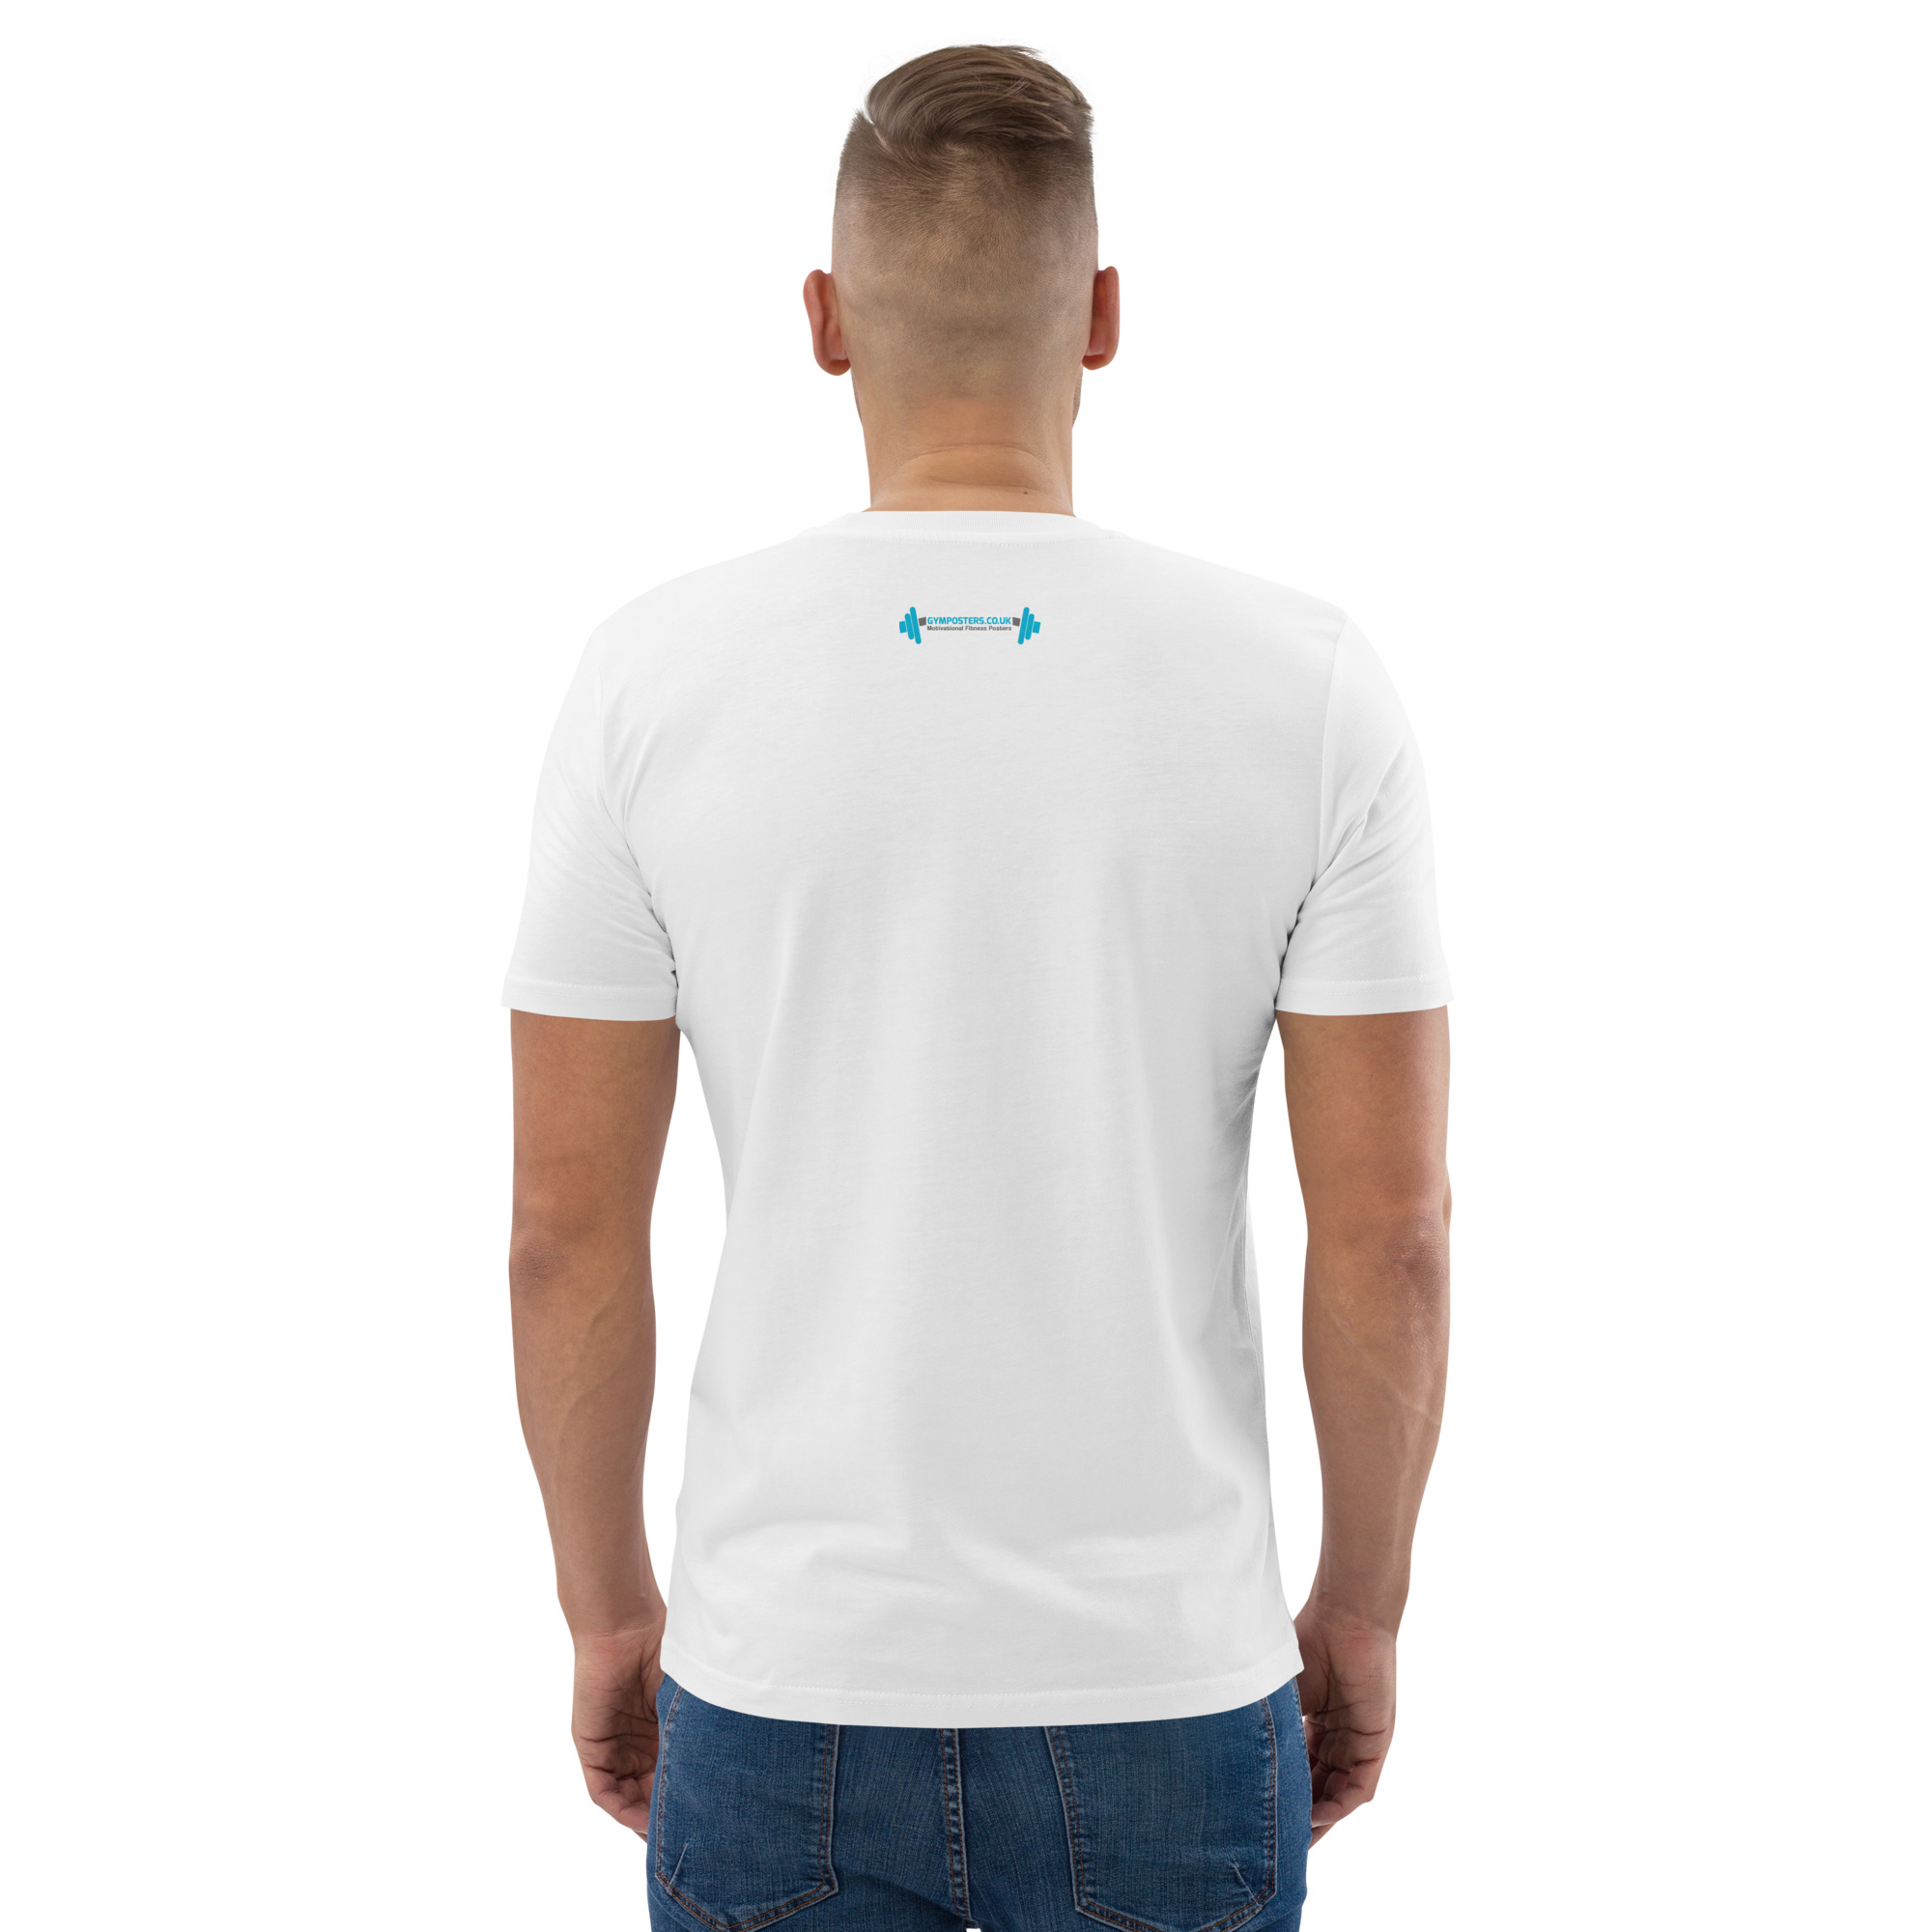 unisex-organic-cotton-t-shirt-white-back-2-657848138ddd7-1.jpg